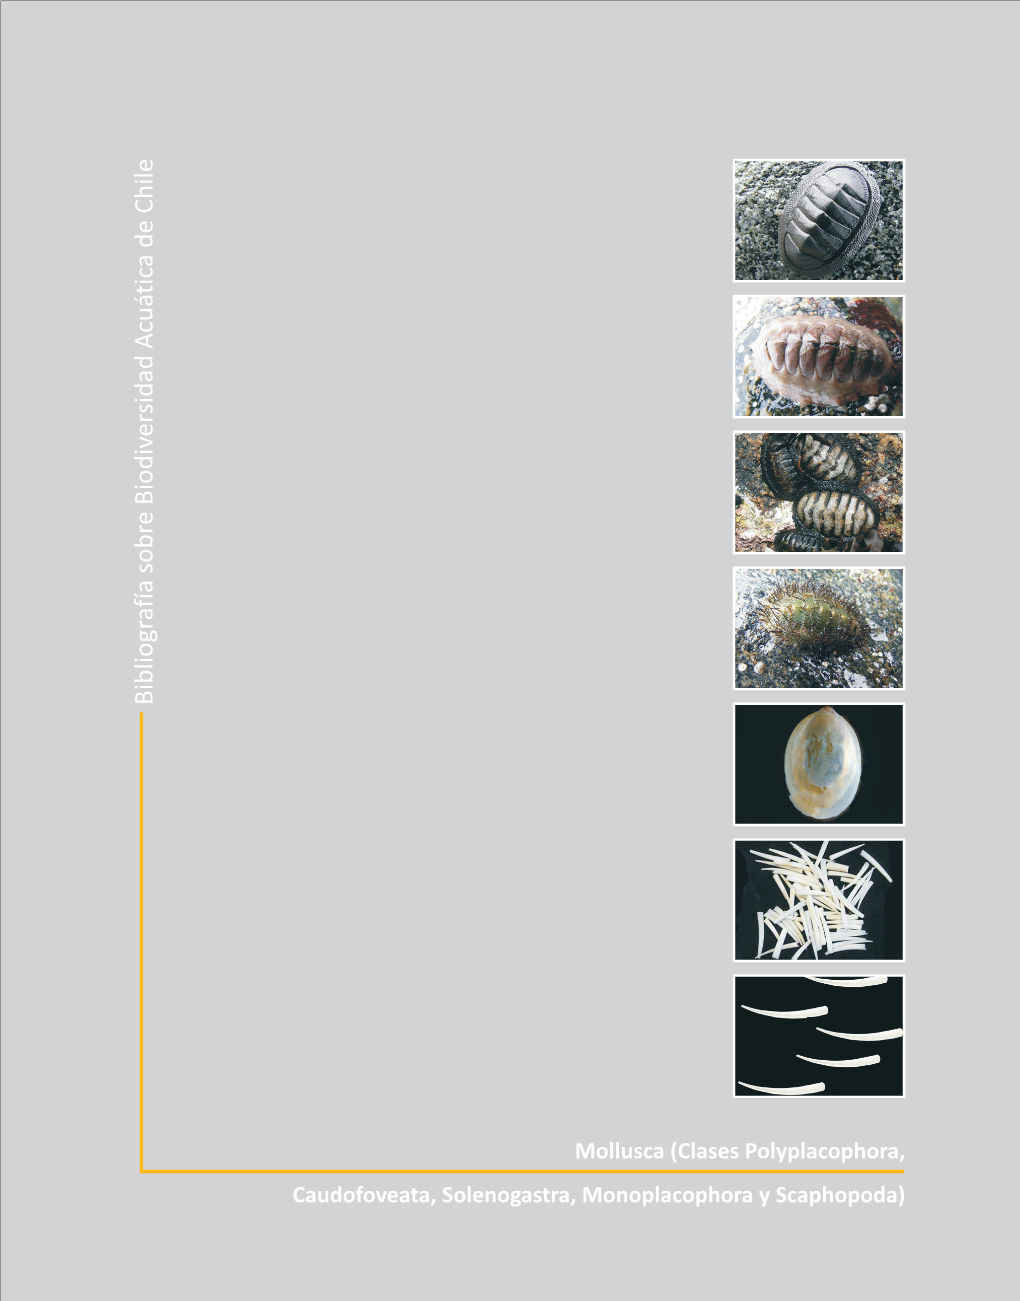 Mollusca (Clases Polyplacophora, Caudofoveata, Solenogastra, Monoplacophora Y Scaphopoda)